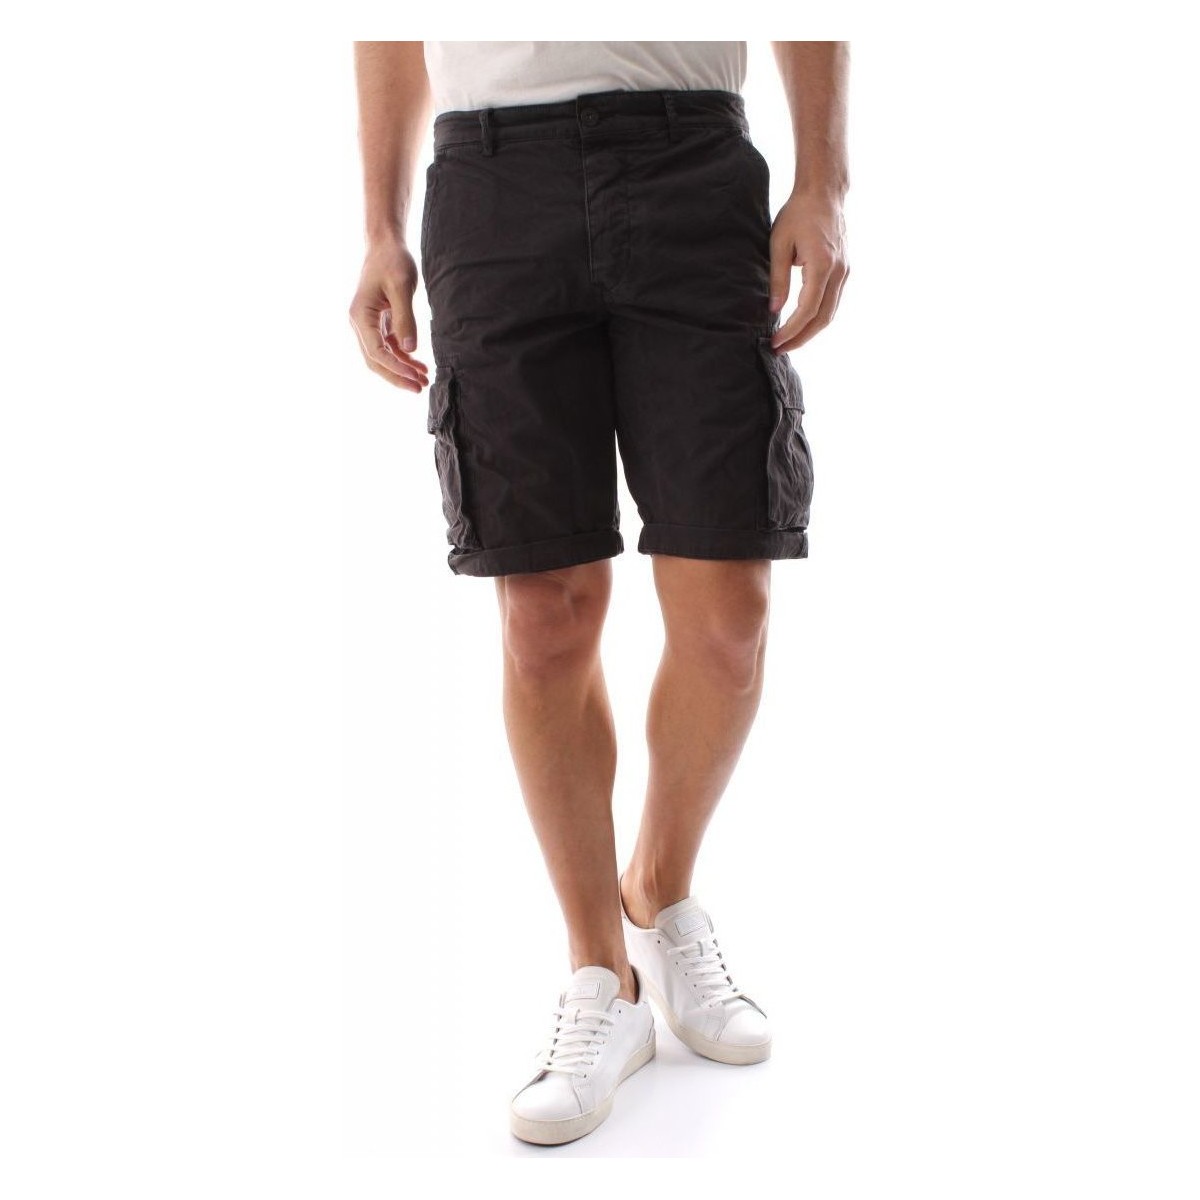 textil Hombre Shorts / Bermudas 40weft NICK 6013/6874-W1909 BLACK Negro